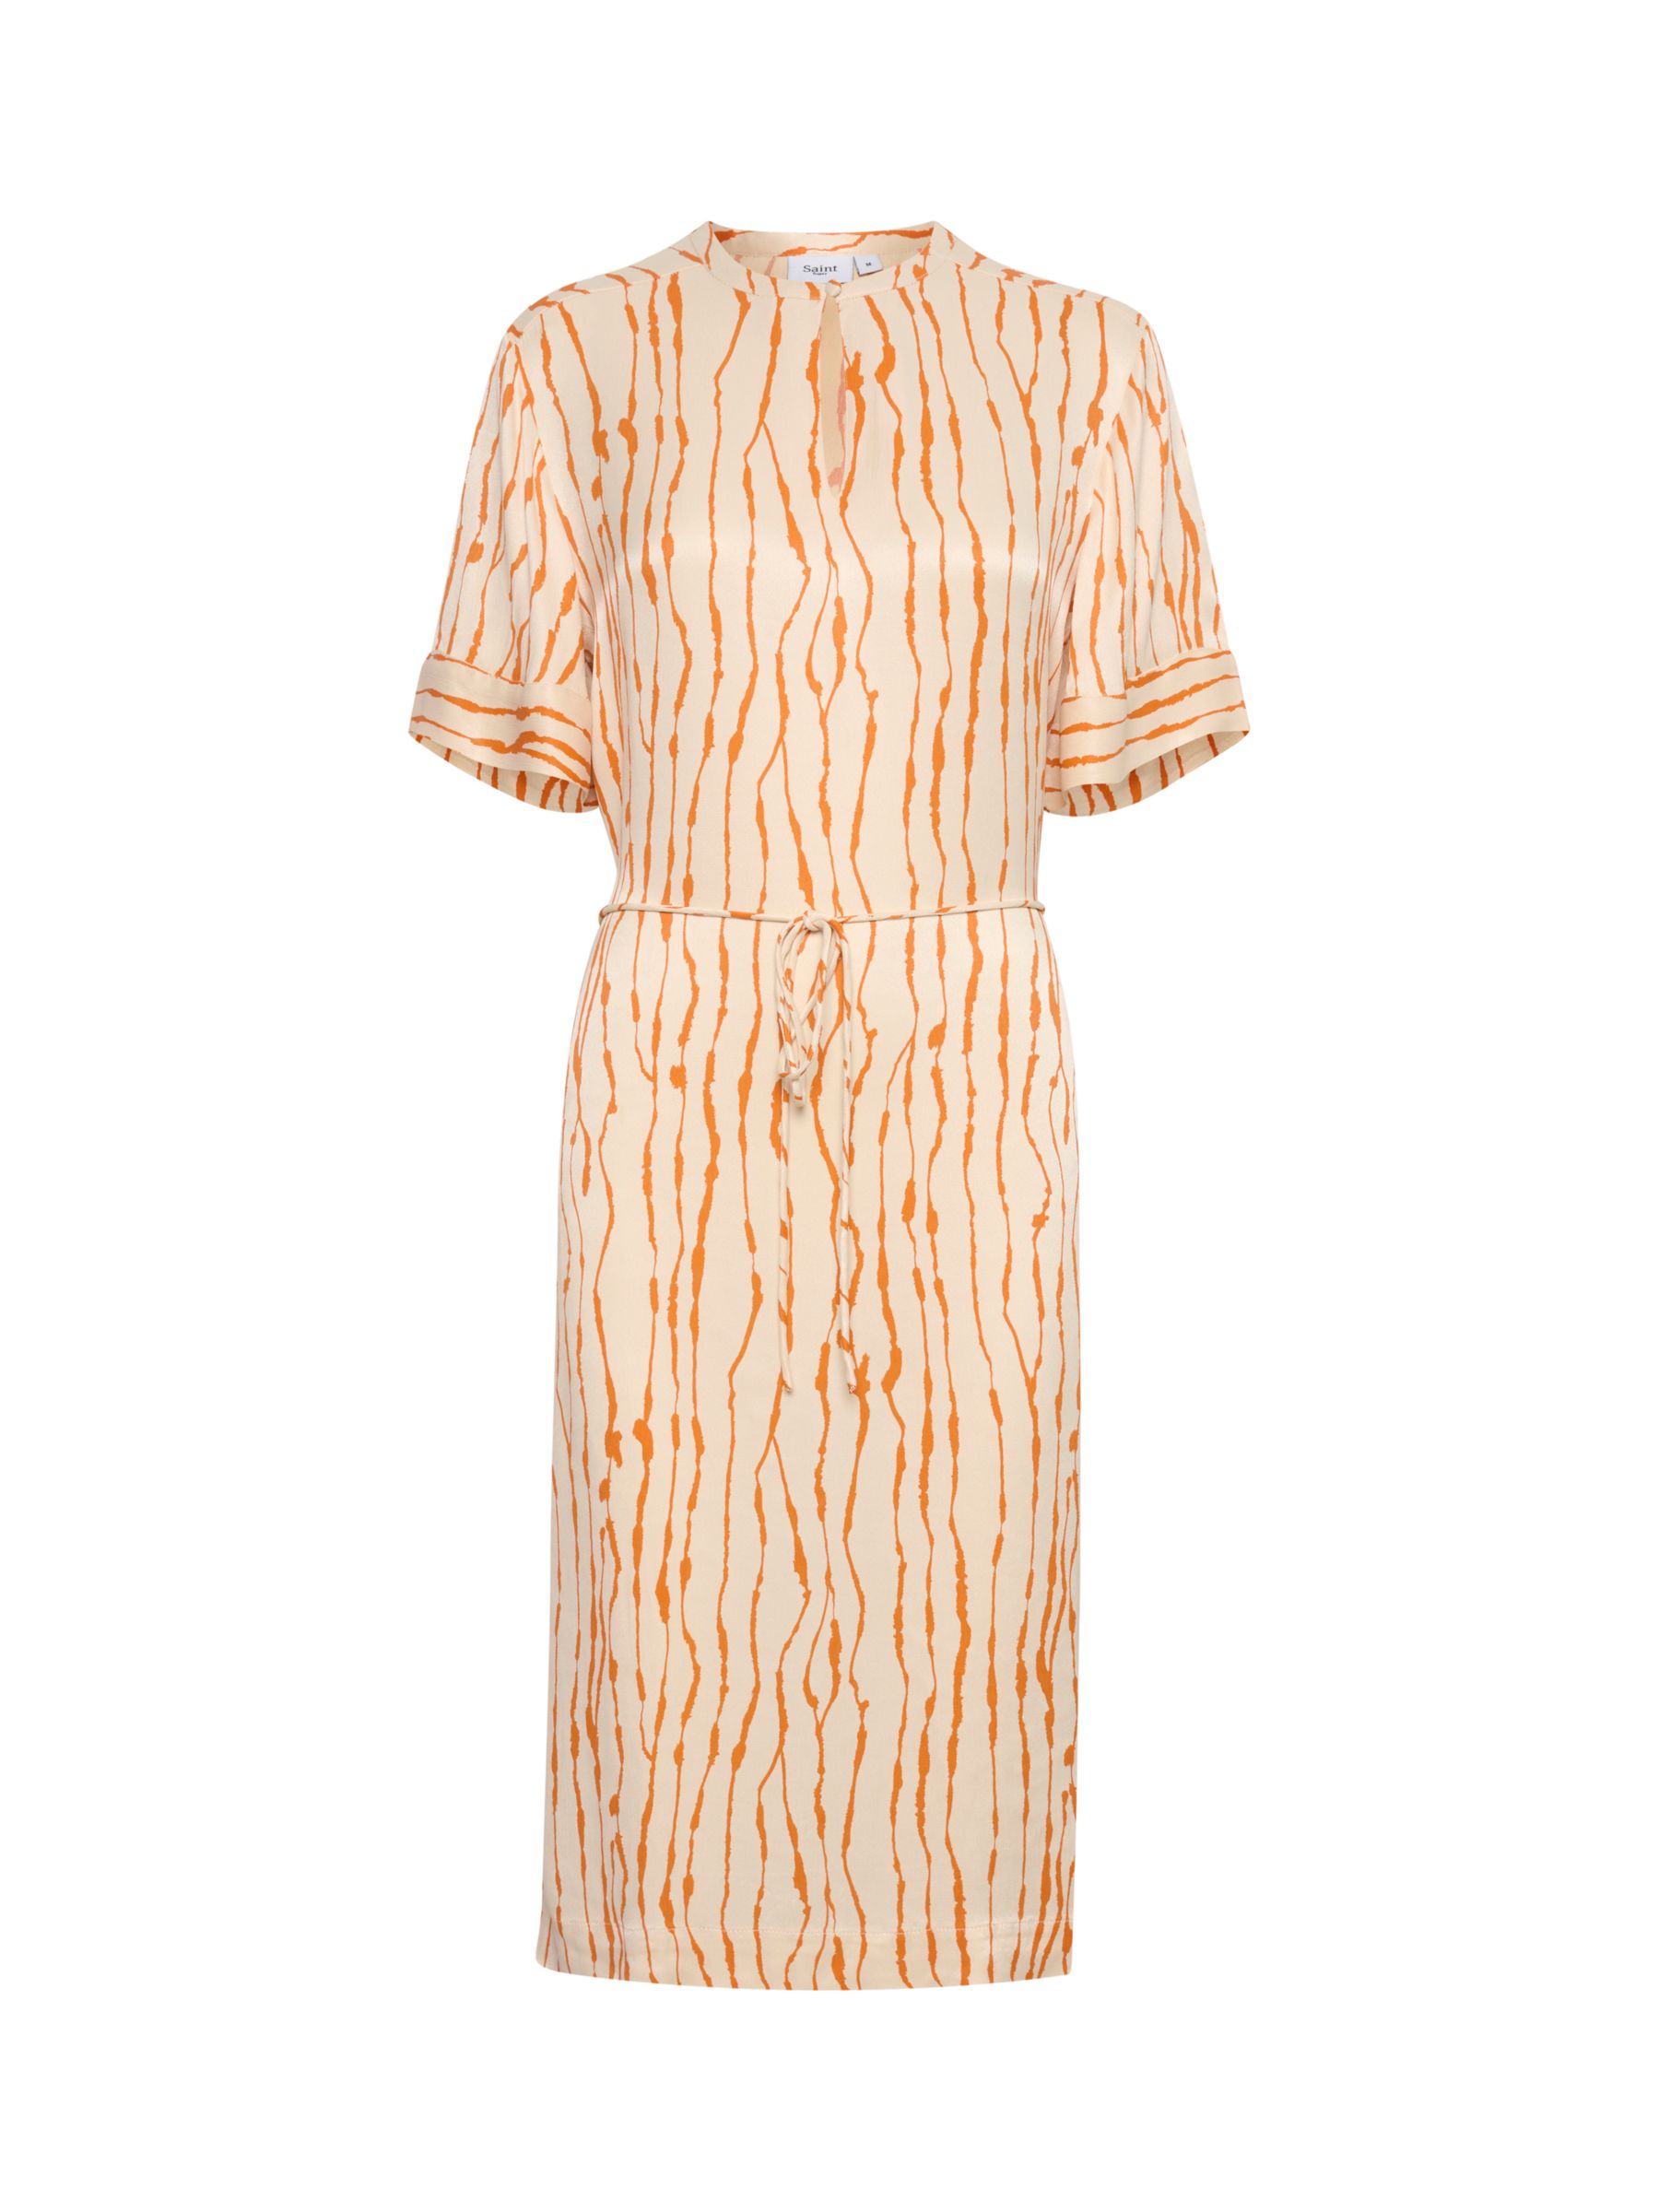 Saint Tropez Thoma Dress, Orange at John Lewis & Partners